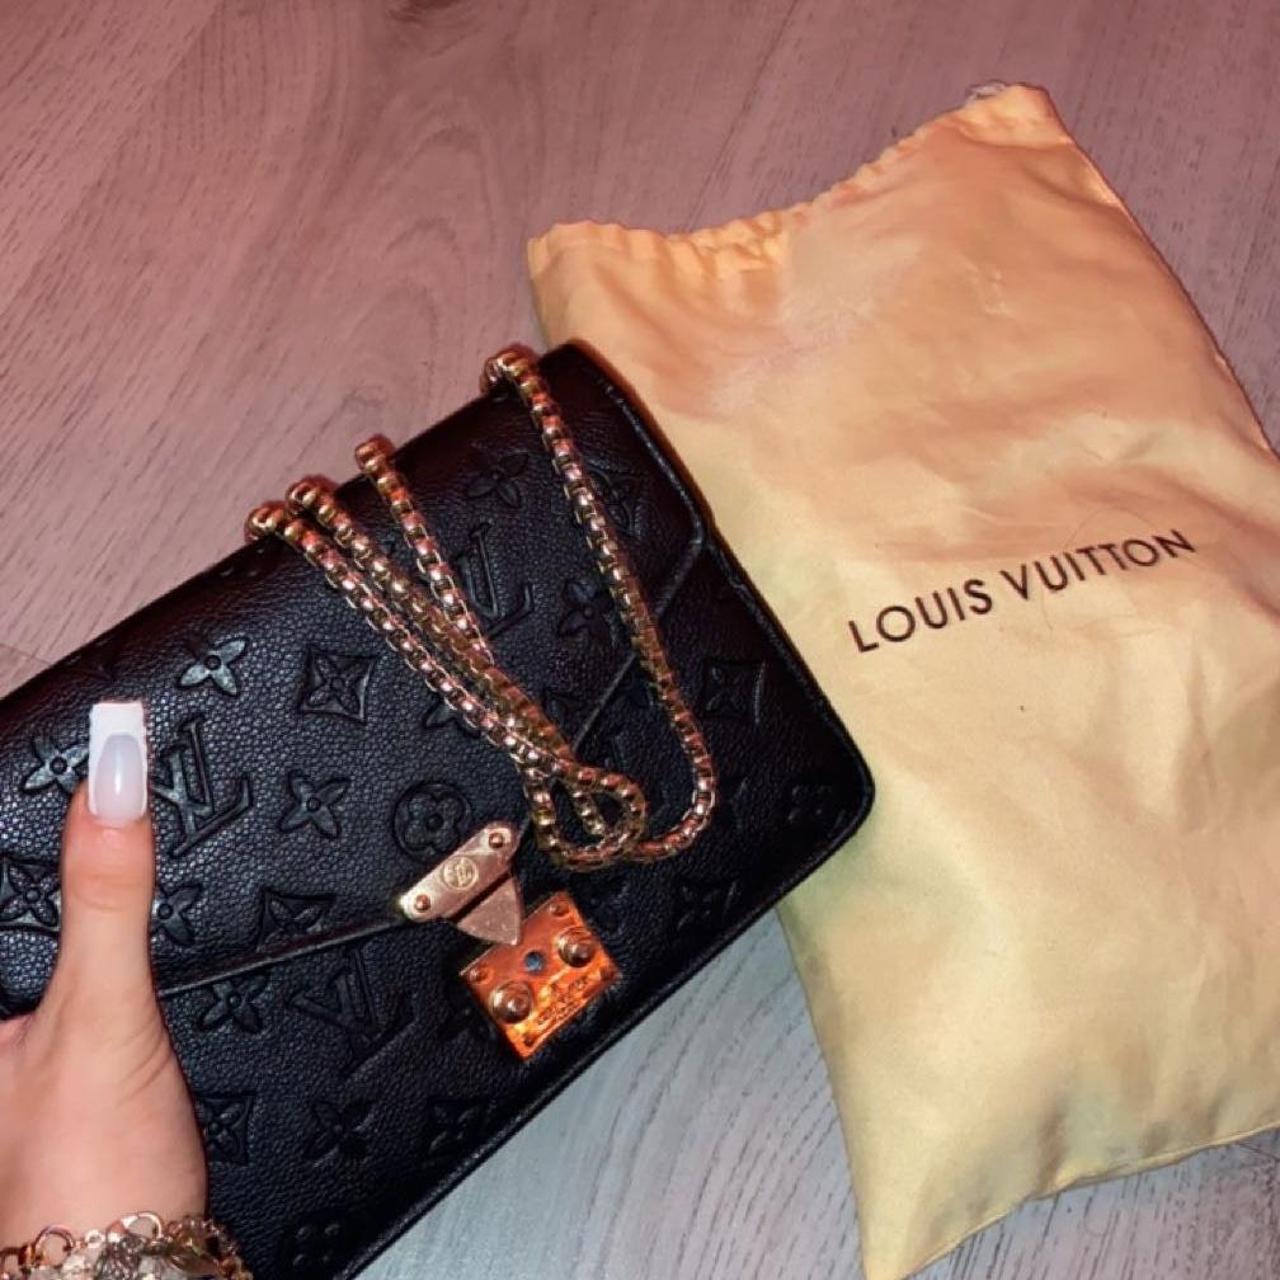 Louis Vuitton Shopping Bag. *JUST THE BAG* Smudged - Depop